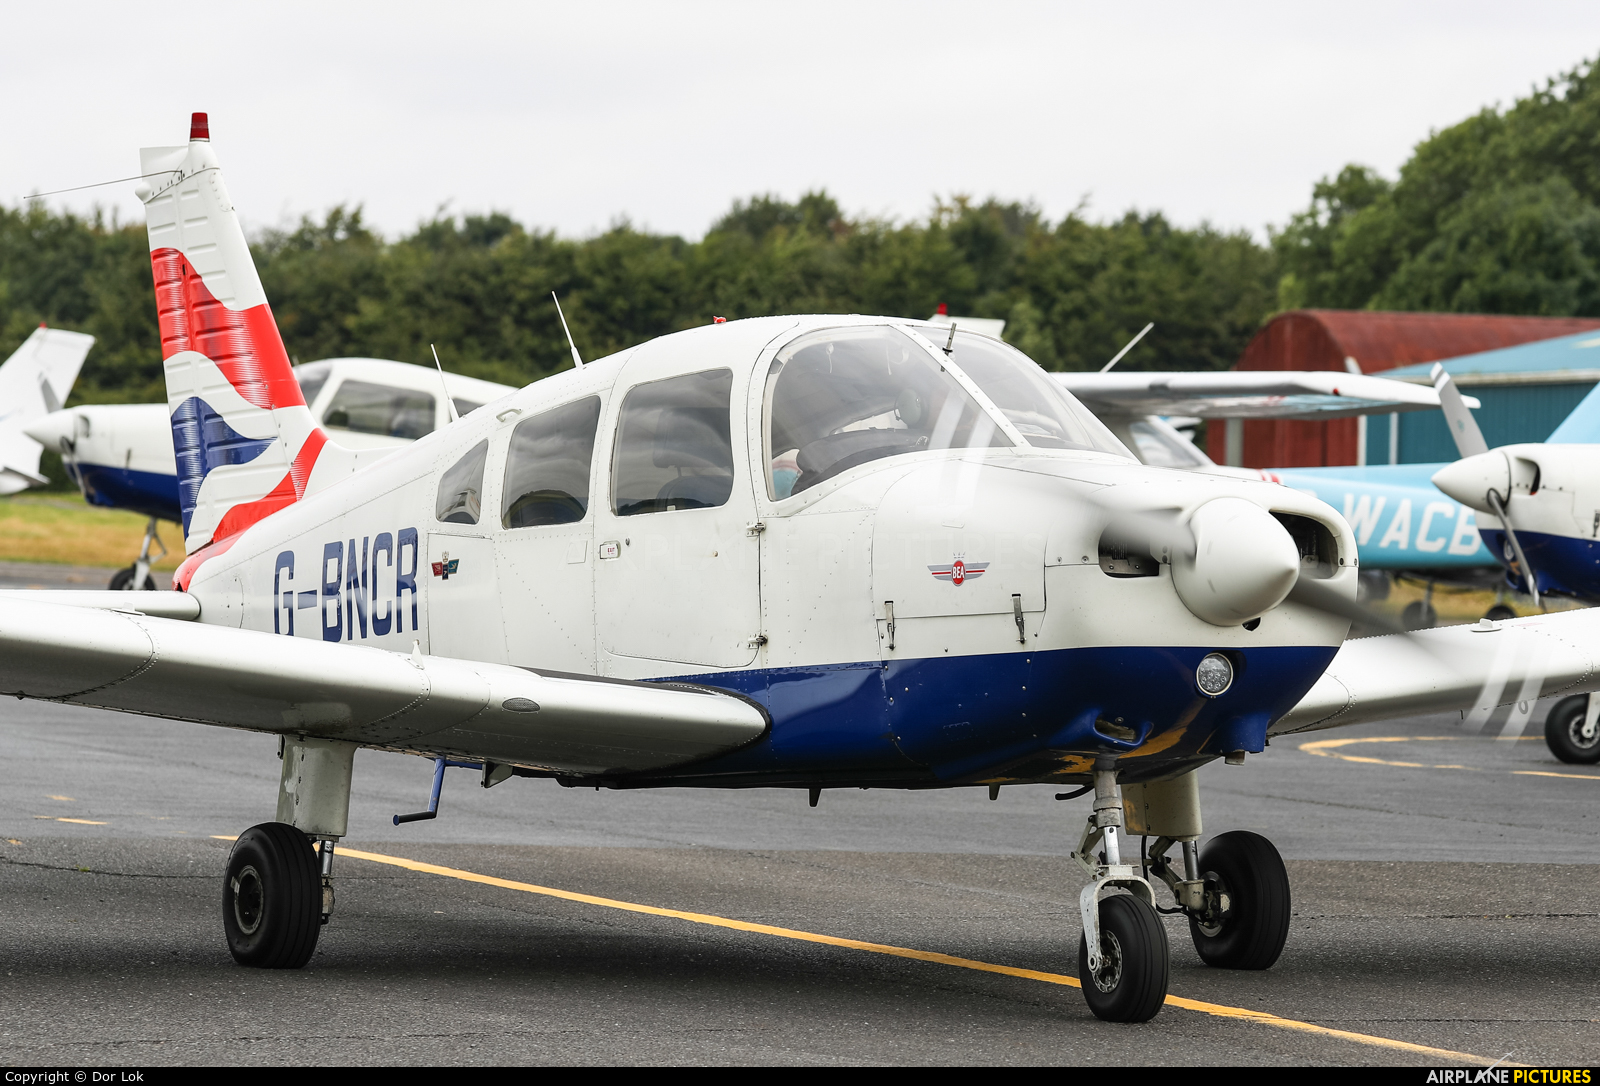 British Airways Flying Club G-BNCR aircraft at Wycombe Air Park - Booker